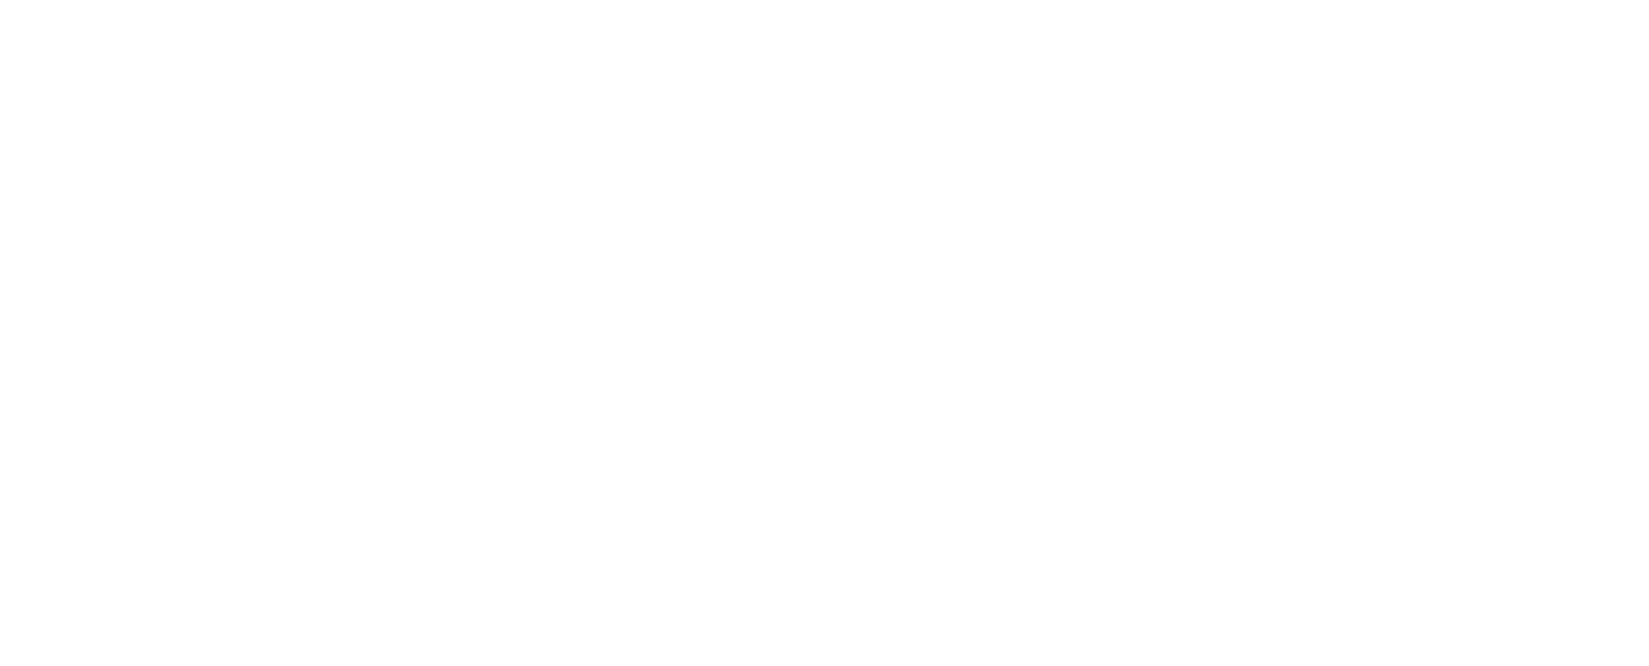 Royalty Pharma logo pour fonds sombres (PNG transparent)